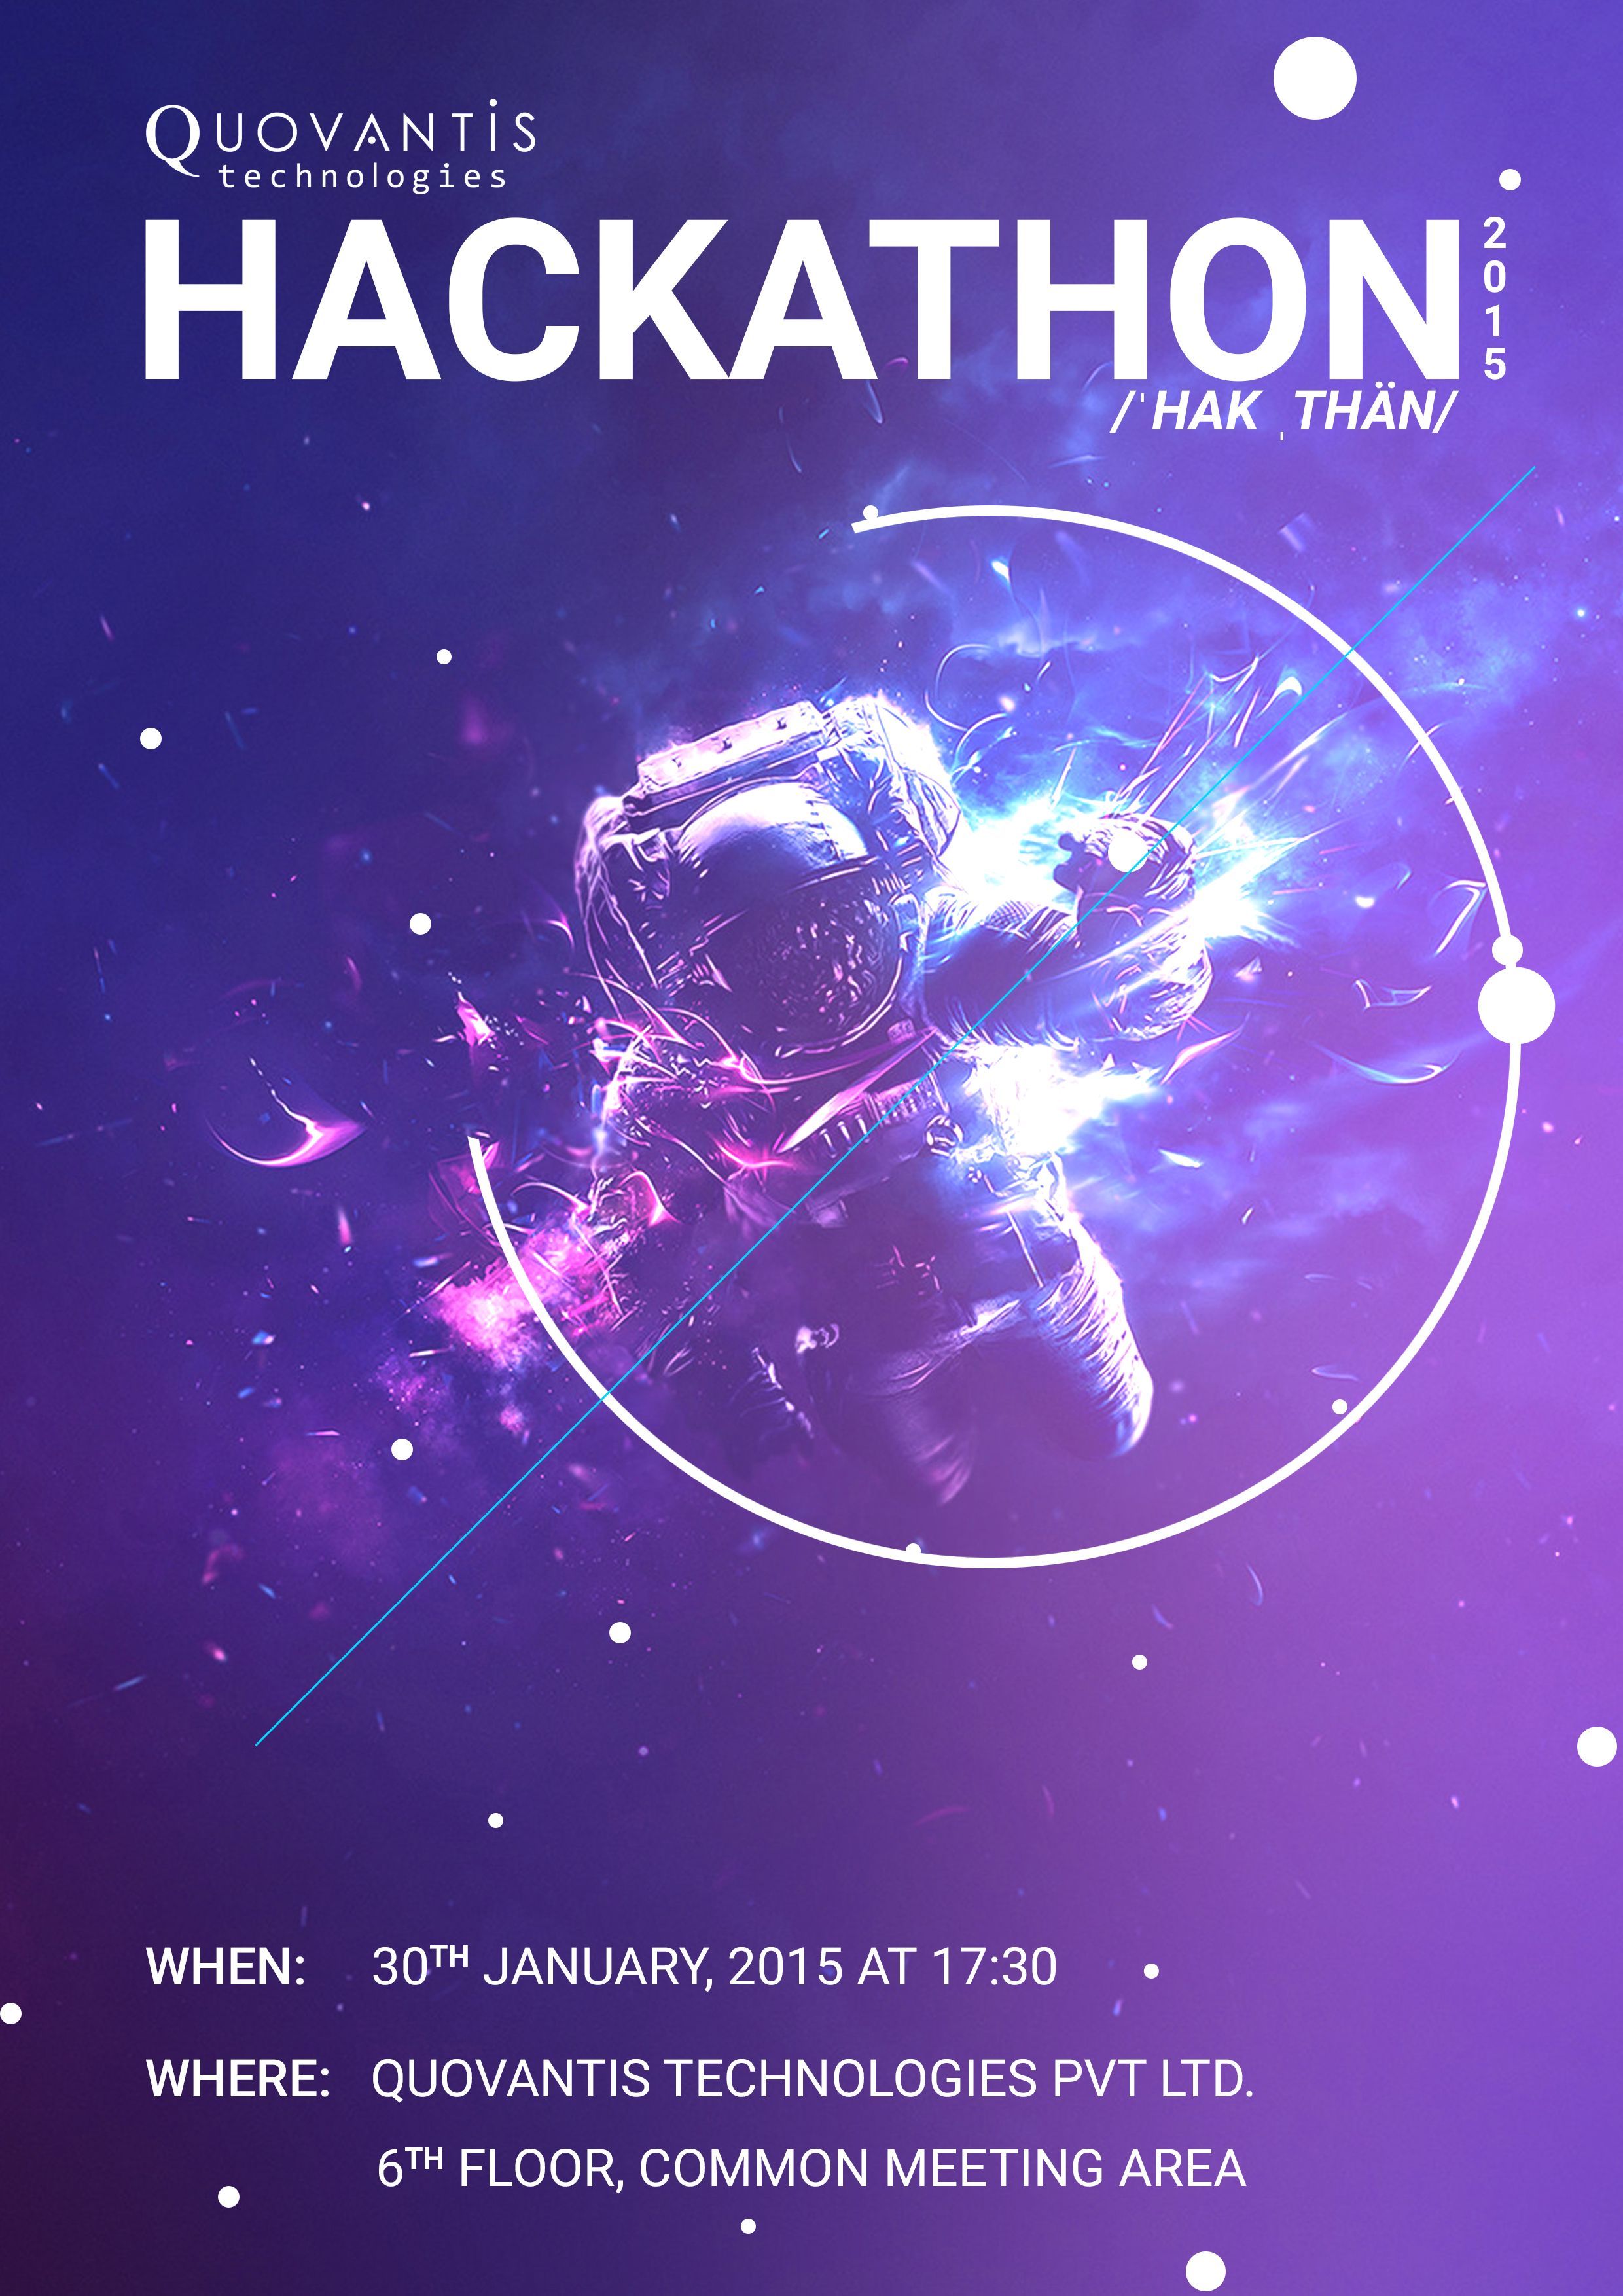 Best Hackathon poster ideas. hackathon poster, hackathon, hackathon logo